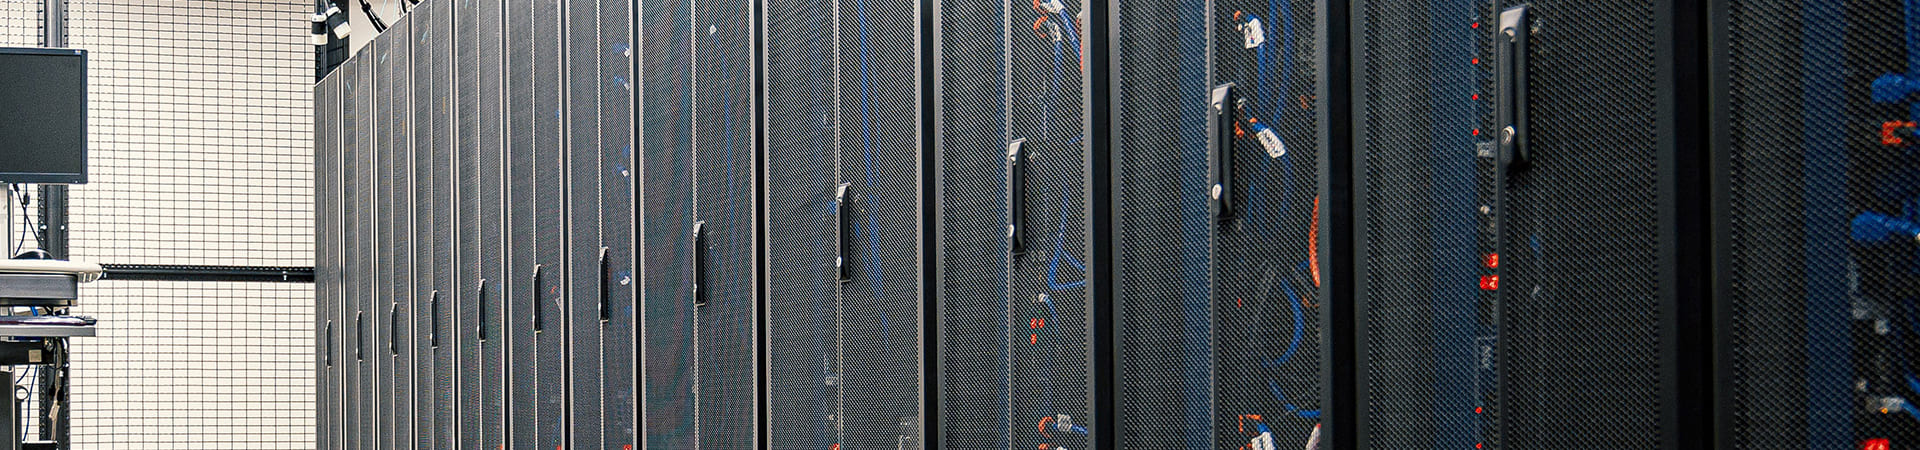 datacenter-server-racks-wide